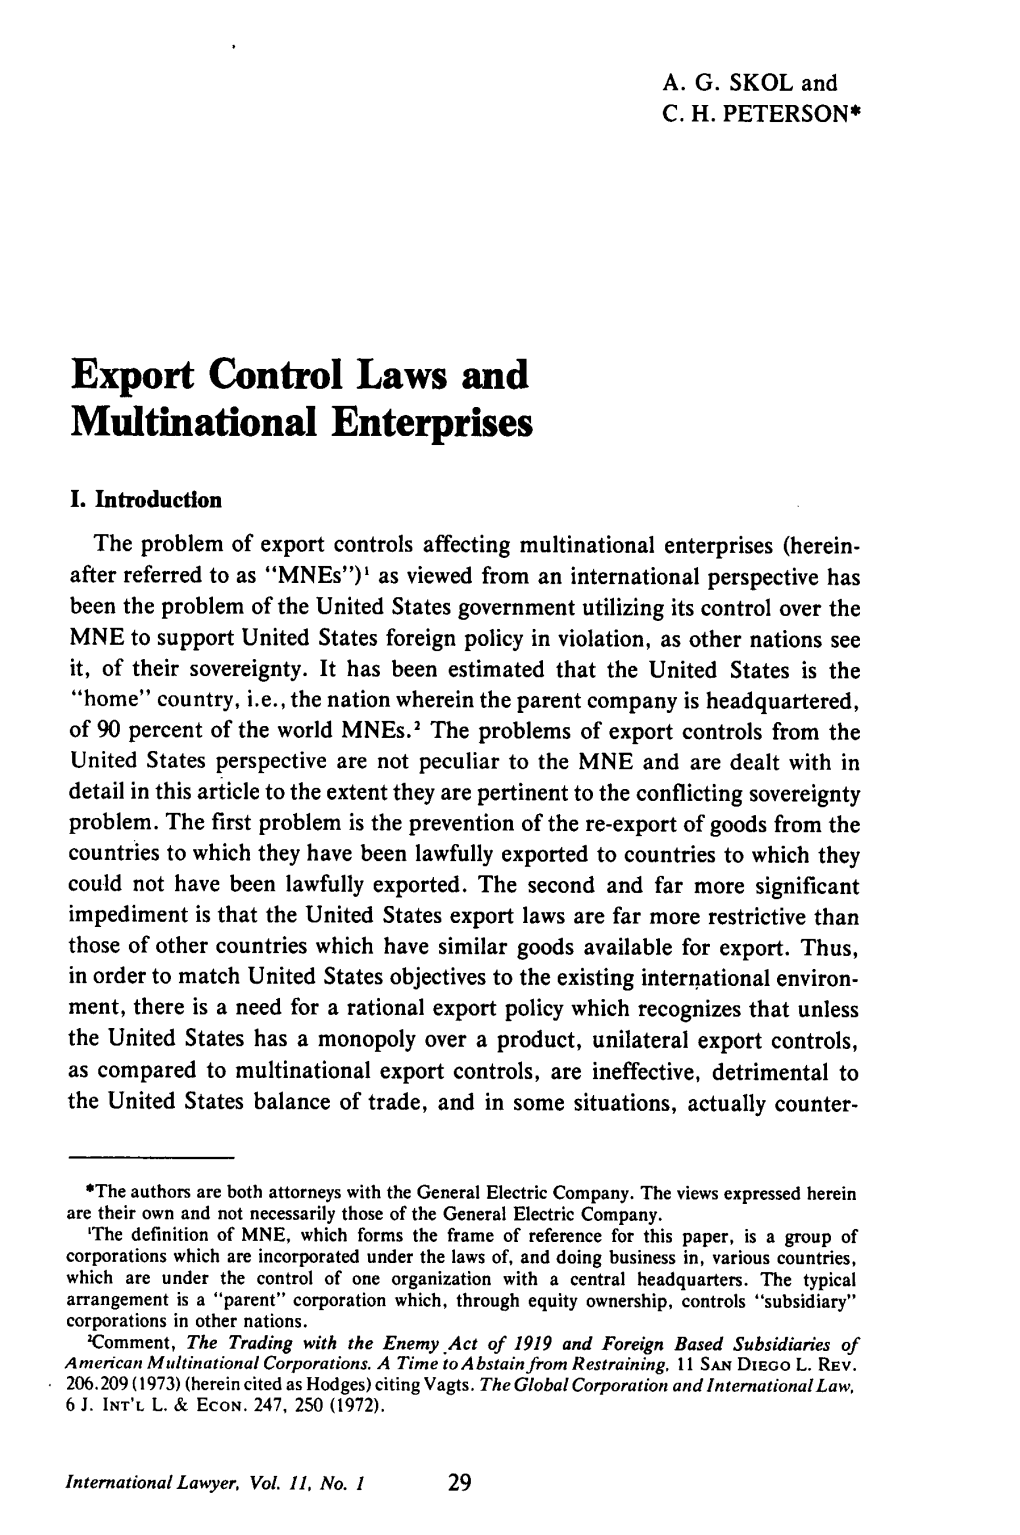 Export Control Laws and Multinational Enterprises